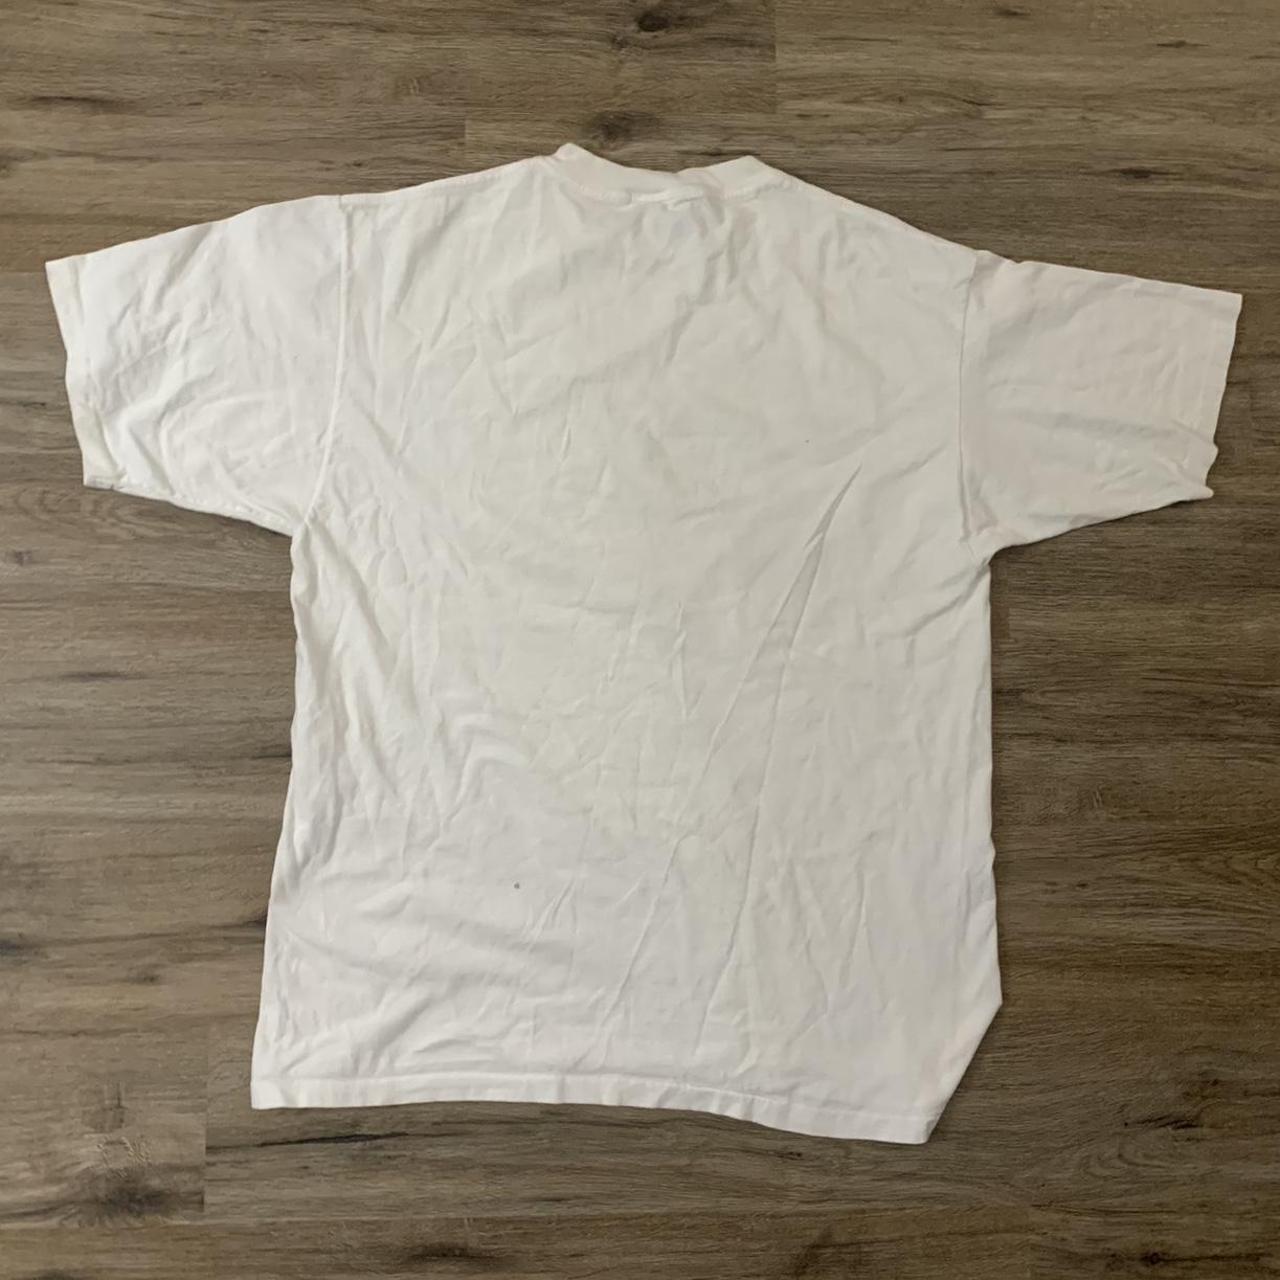 Aztech Mountain Men's White T-shirt (4)